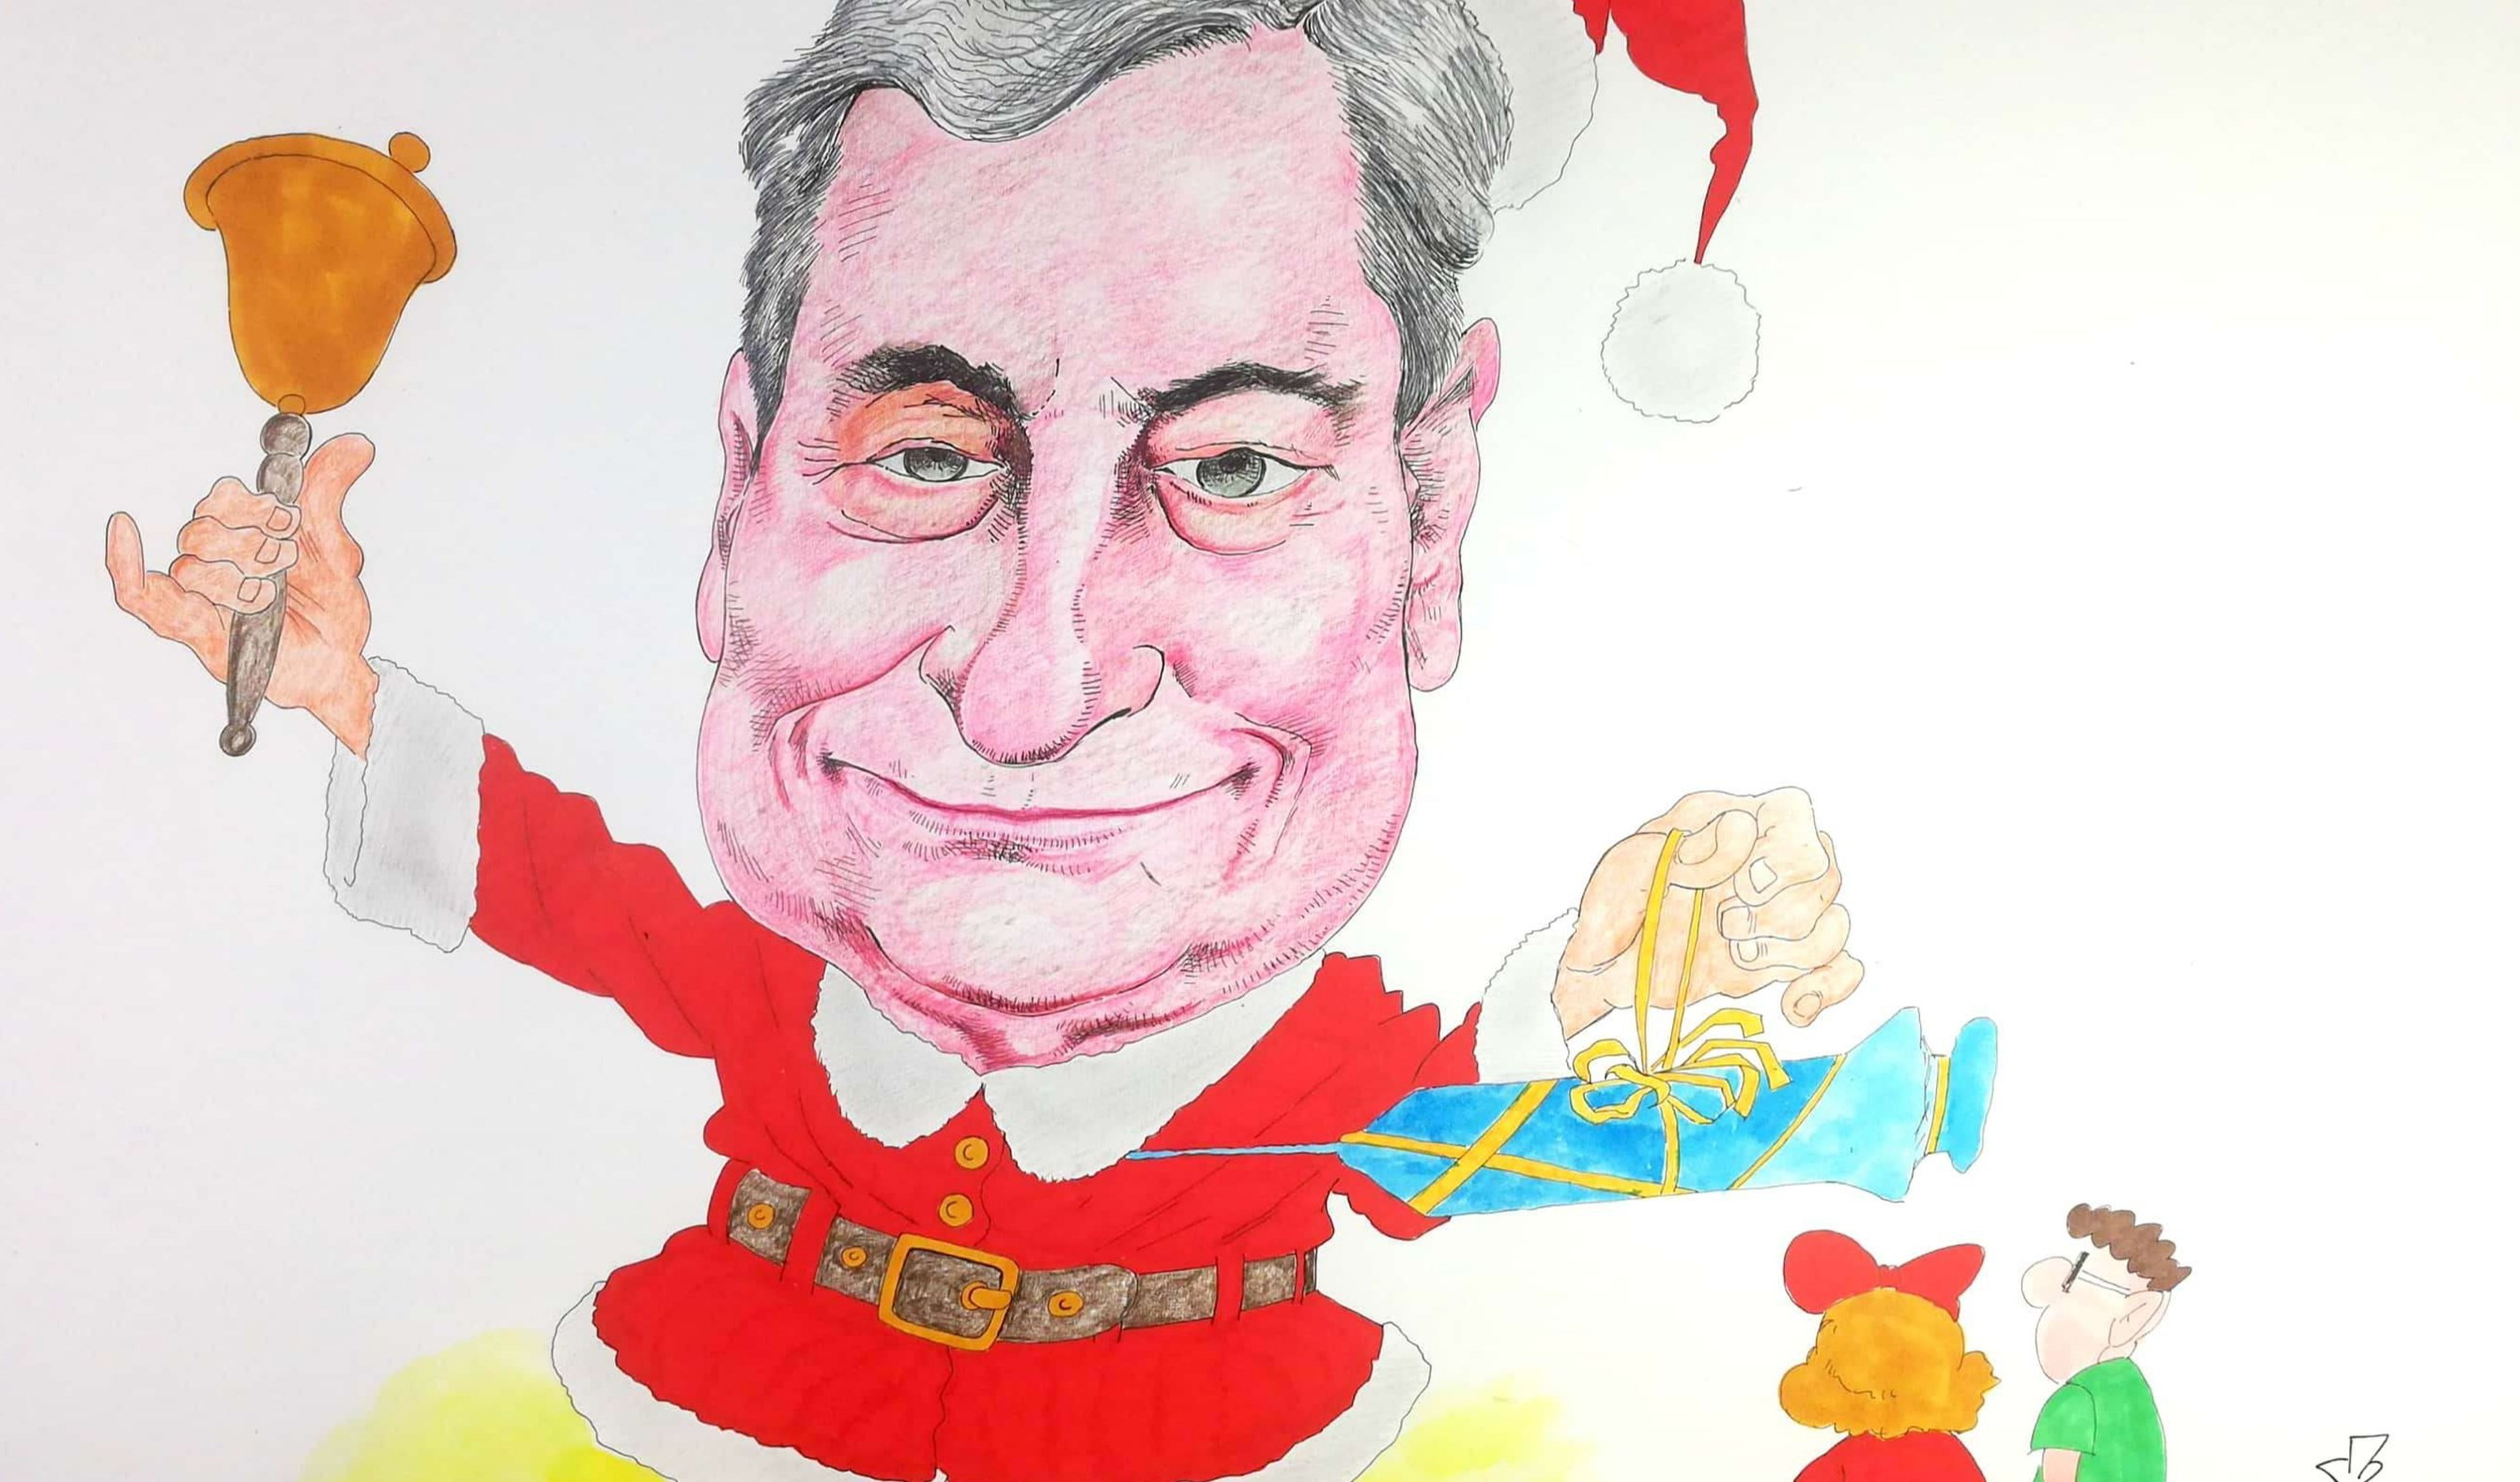 Le Mussaie di Davide Sacco: Draghi in versione Babbo Natale 